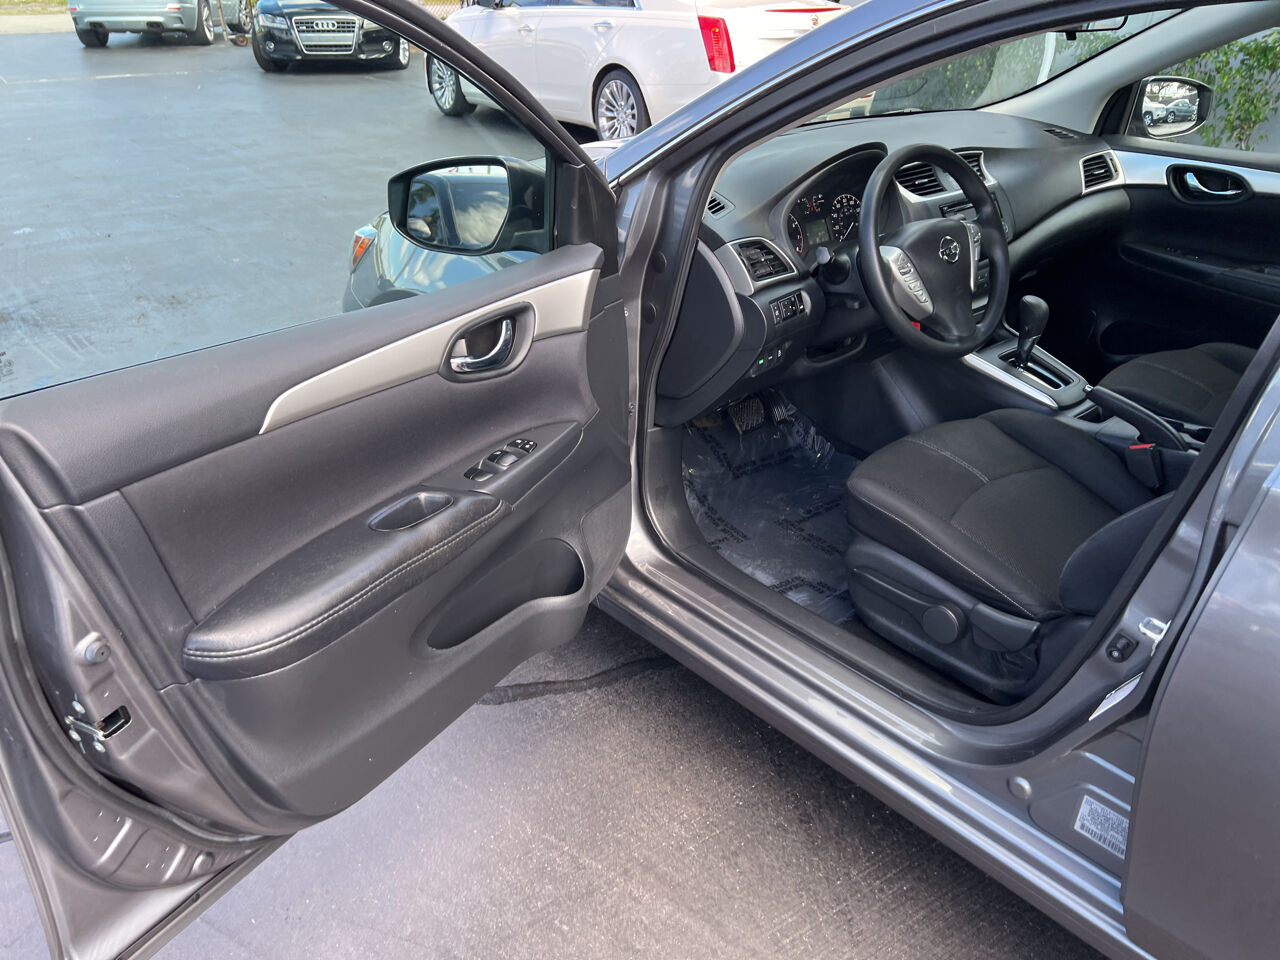 2016 Nissan Sentra Sedan - $10,900